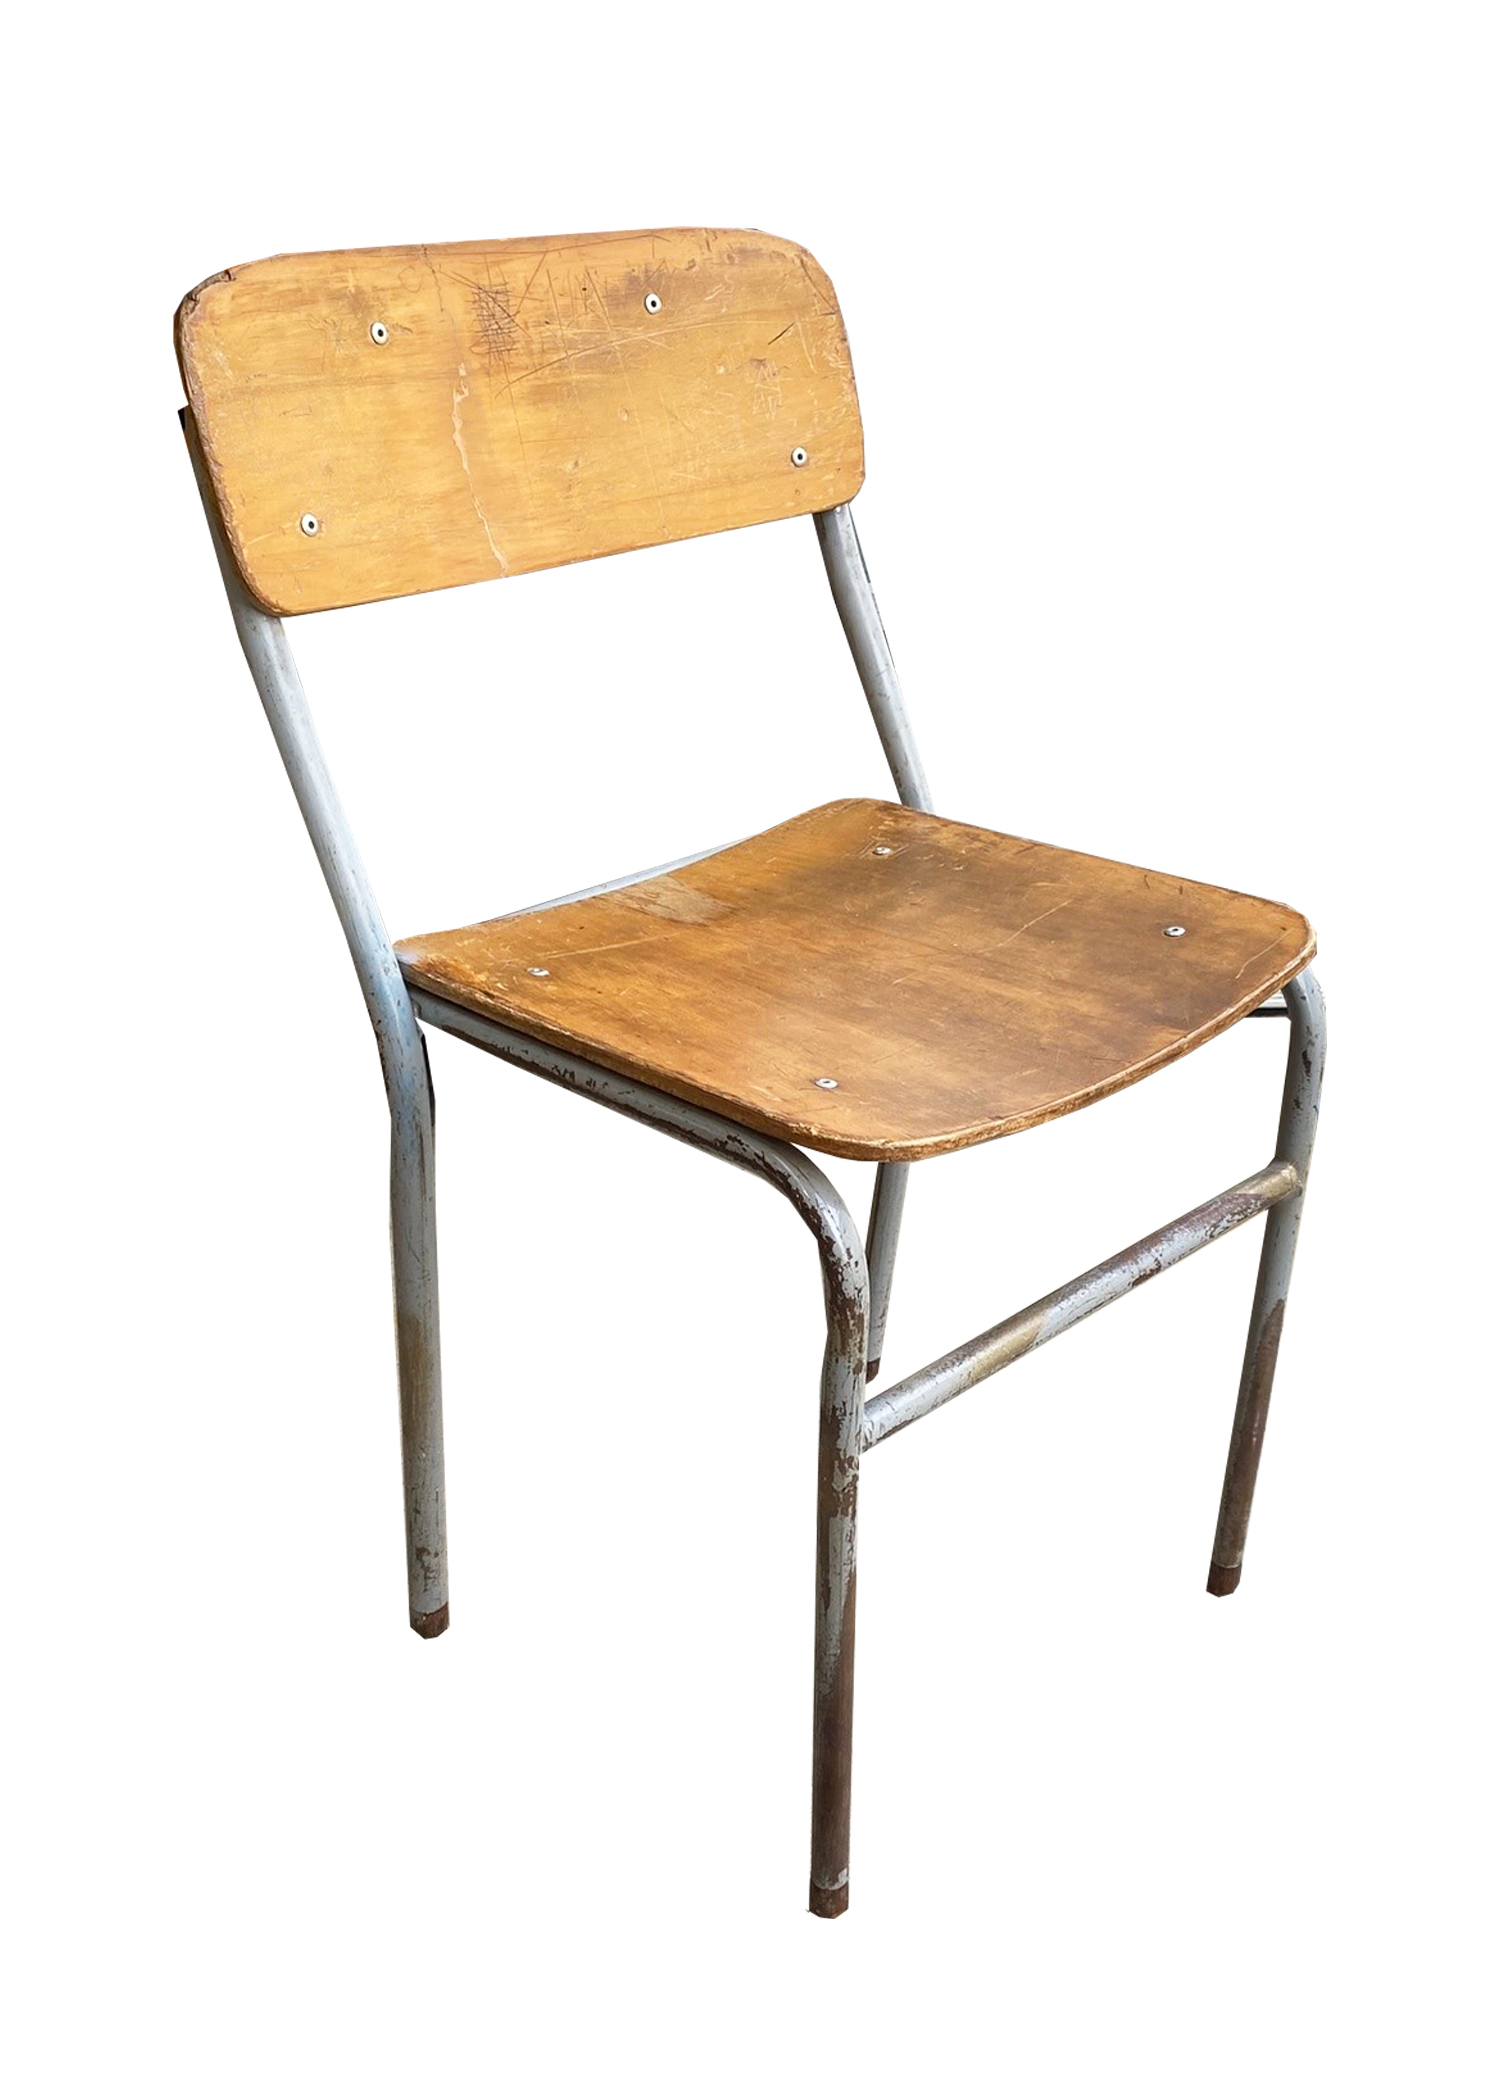 School Chair #2 Wooden (H: 75cm x W: 42cm x D: 40cm)